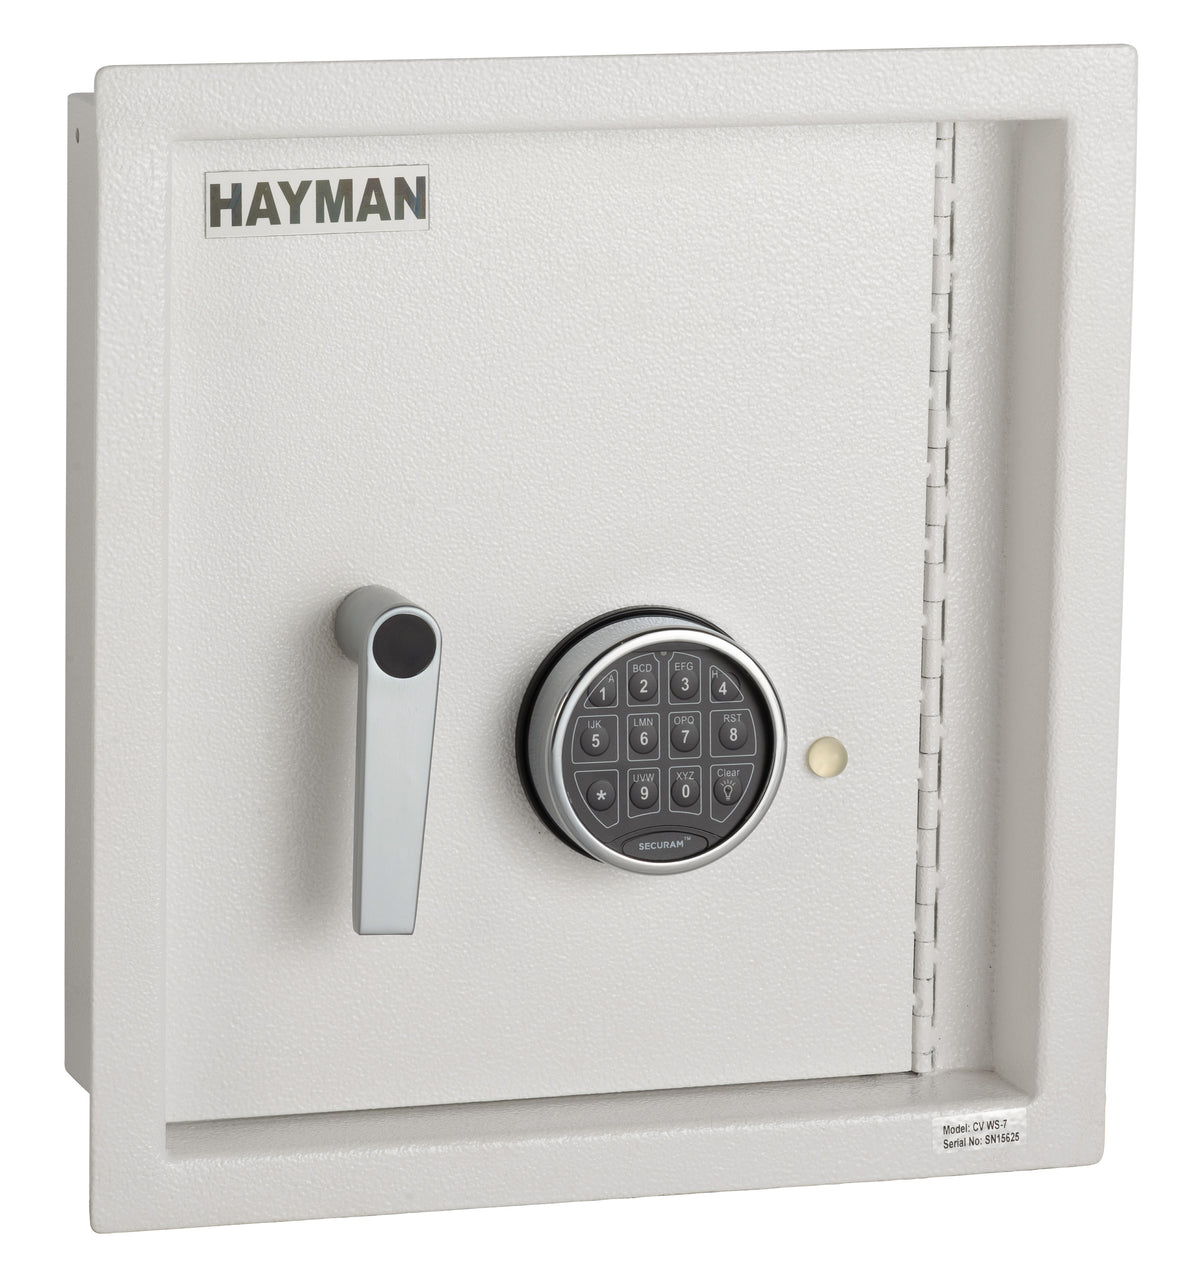 Hayman WS-7 Heavy Duty Wall Safe Door Closed